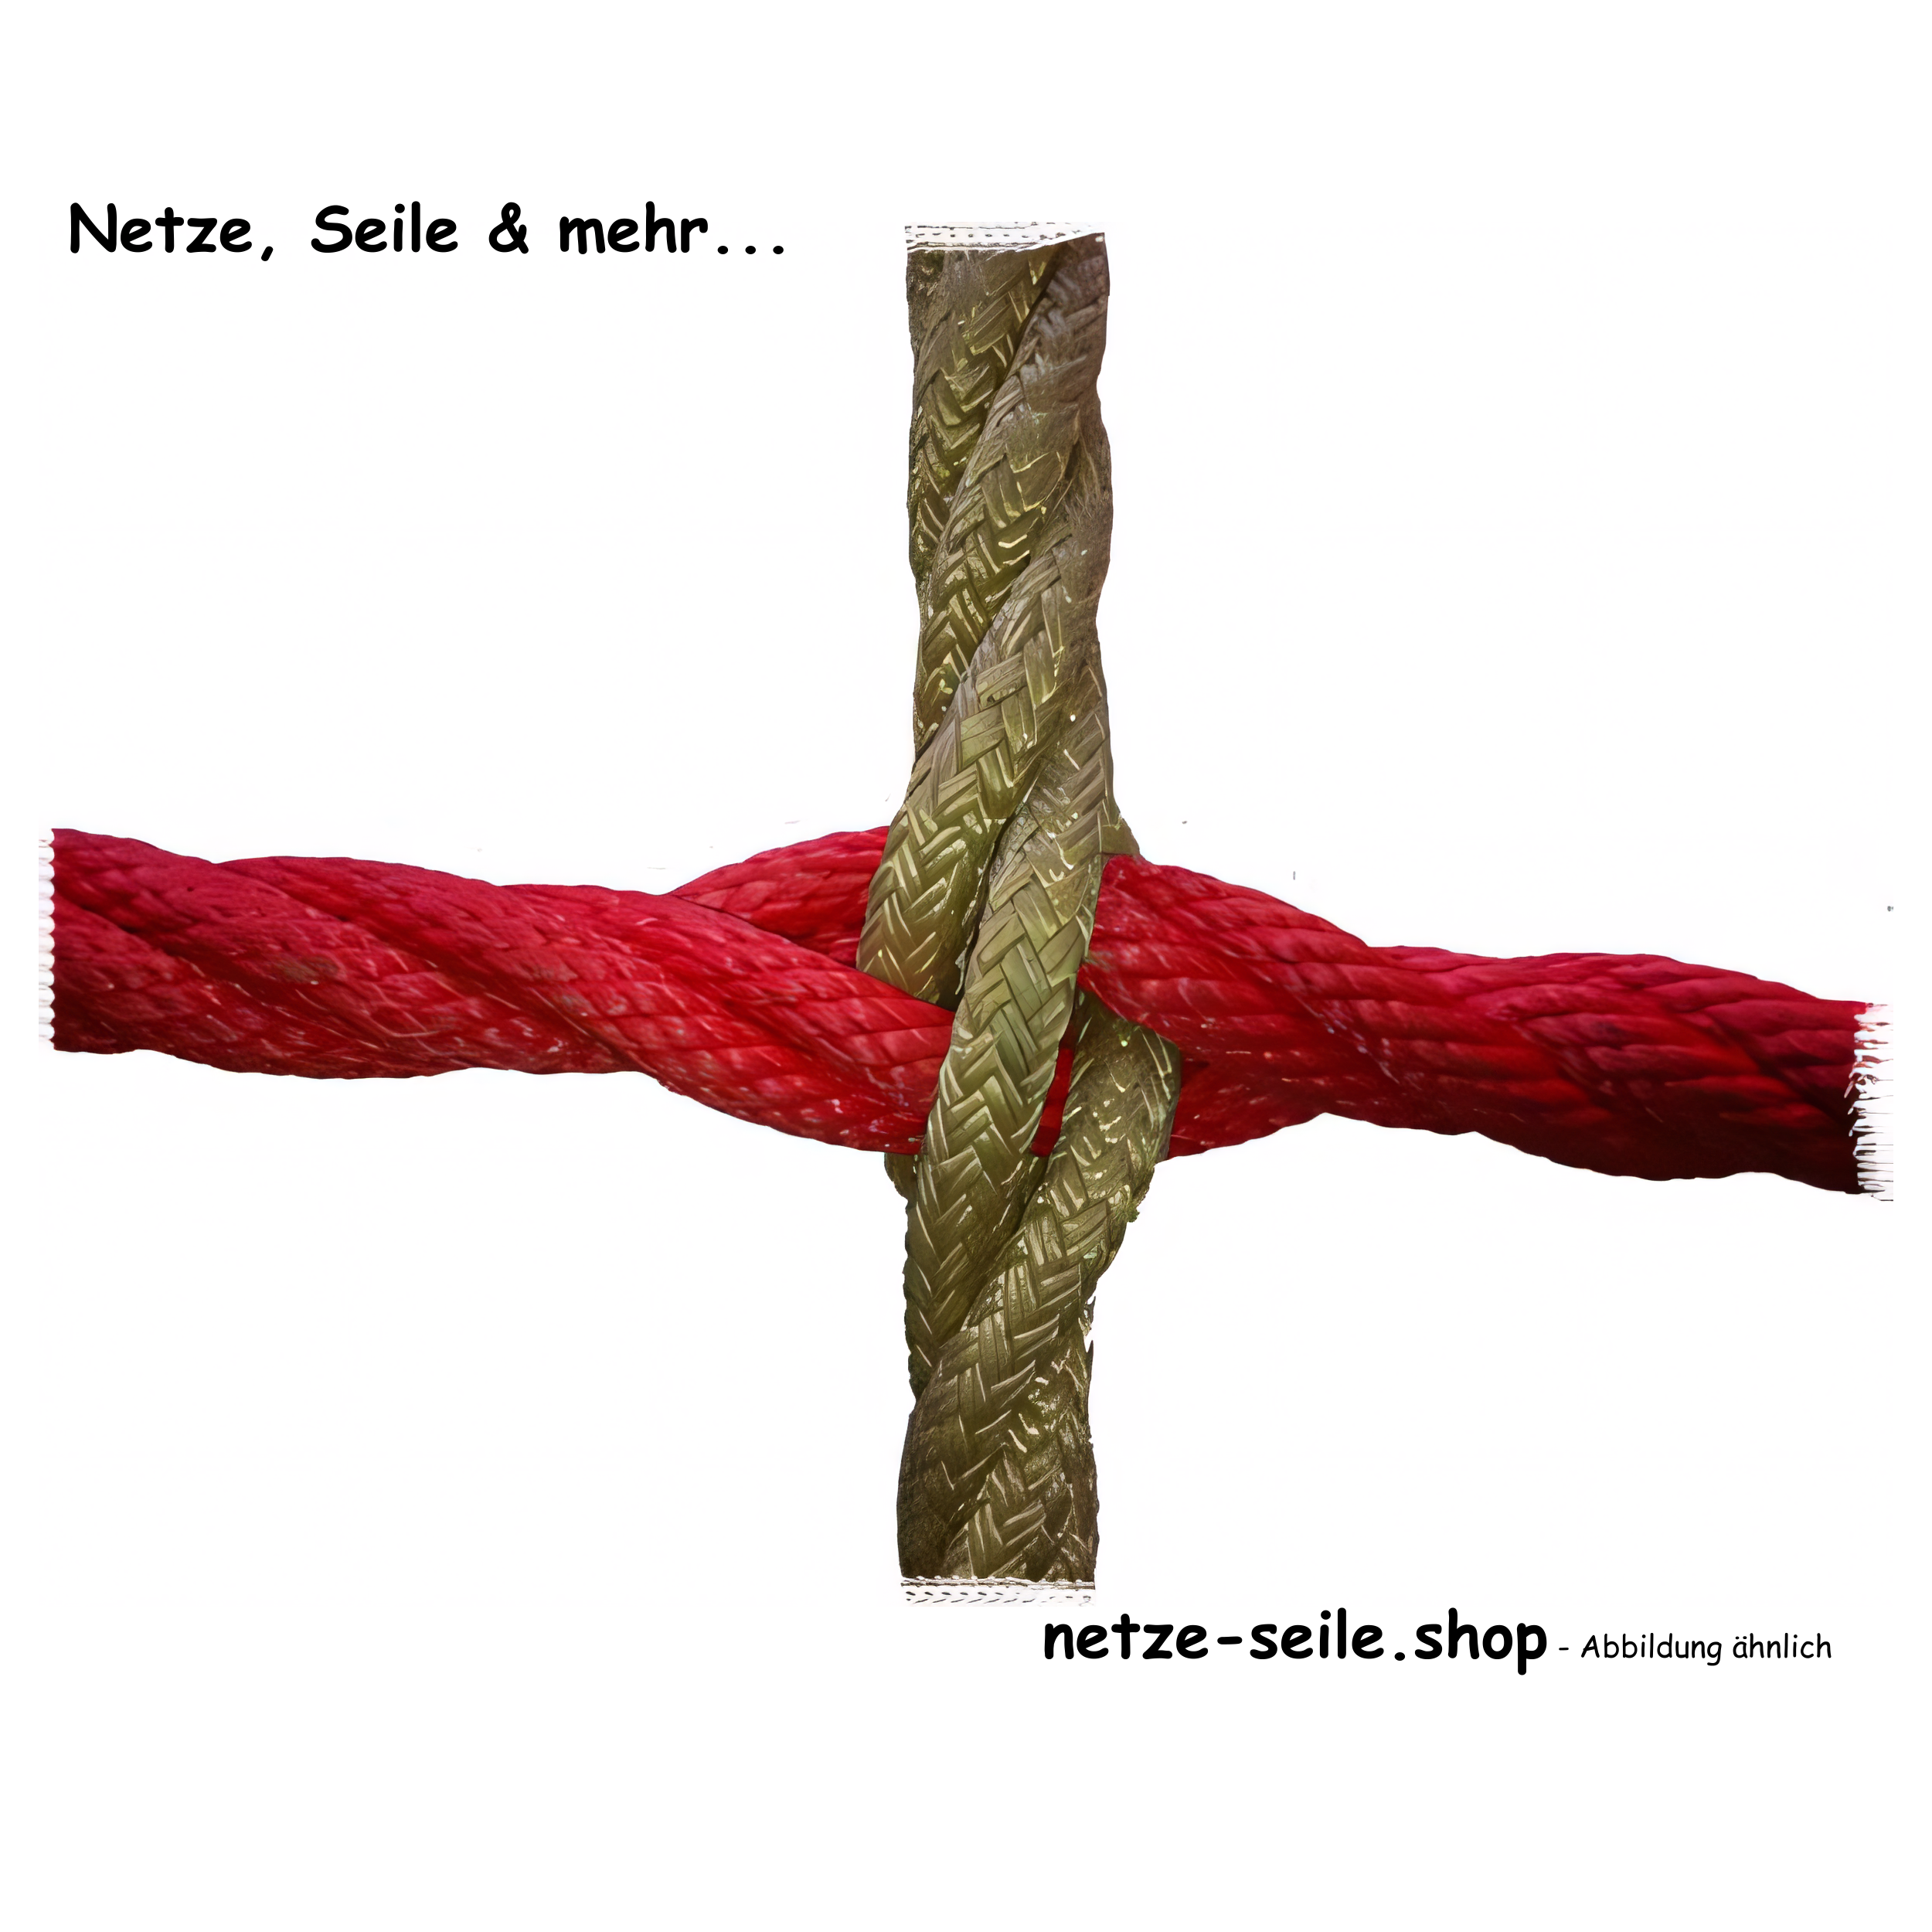 Climbing net made of Ø 16 mm Hercules rope, # 400 mm mesh size, knots spliced by hand